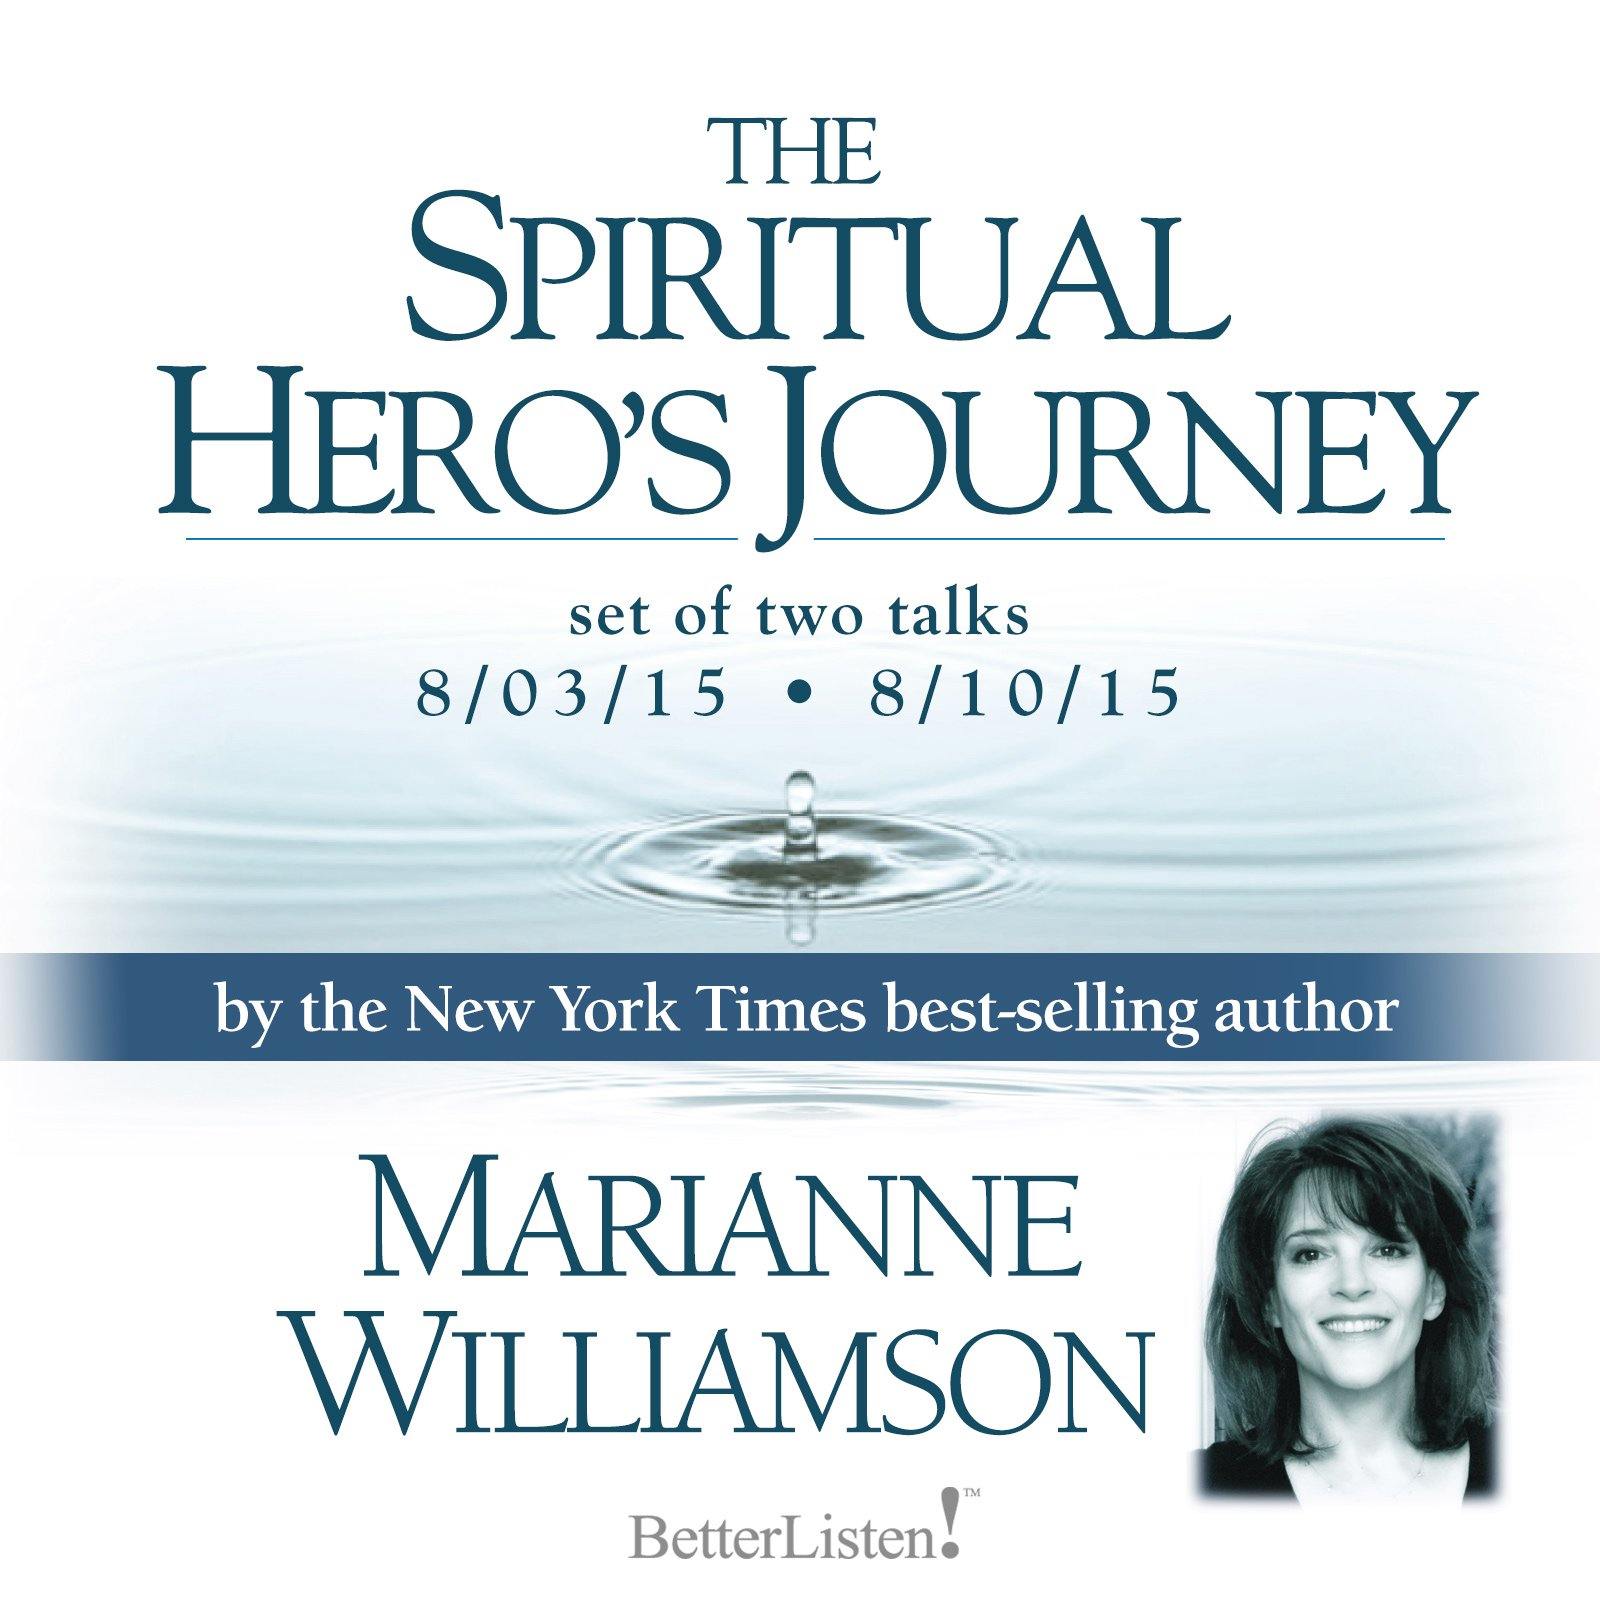 The Spiritual Hero's Journey with Marianne Williamson - BetterListen!